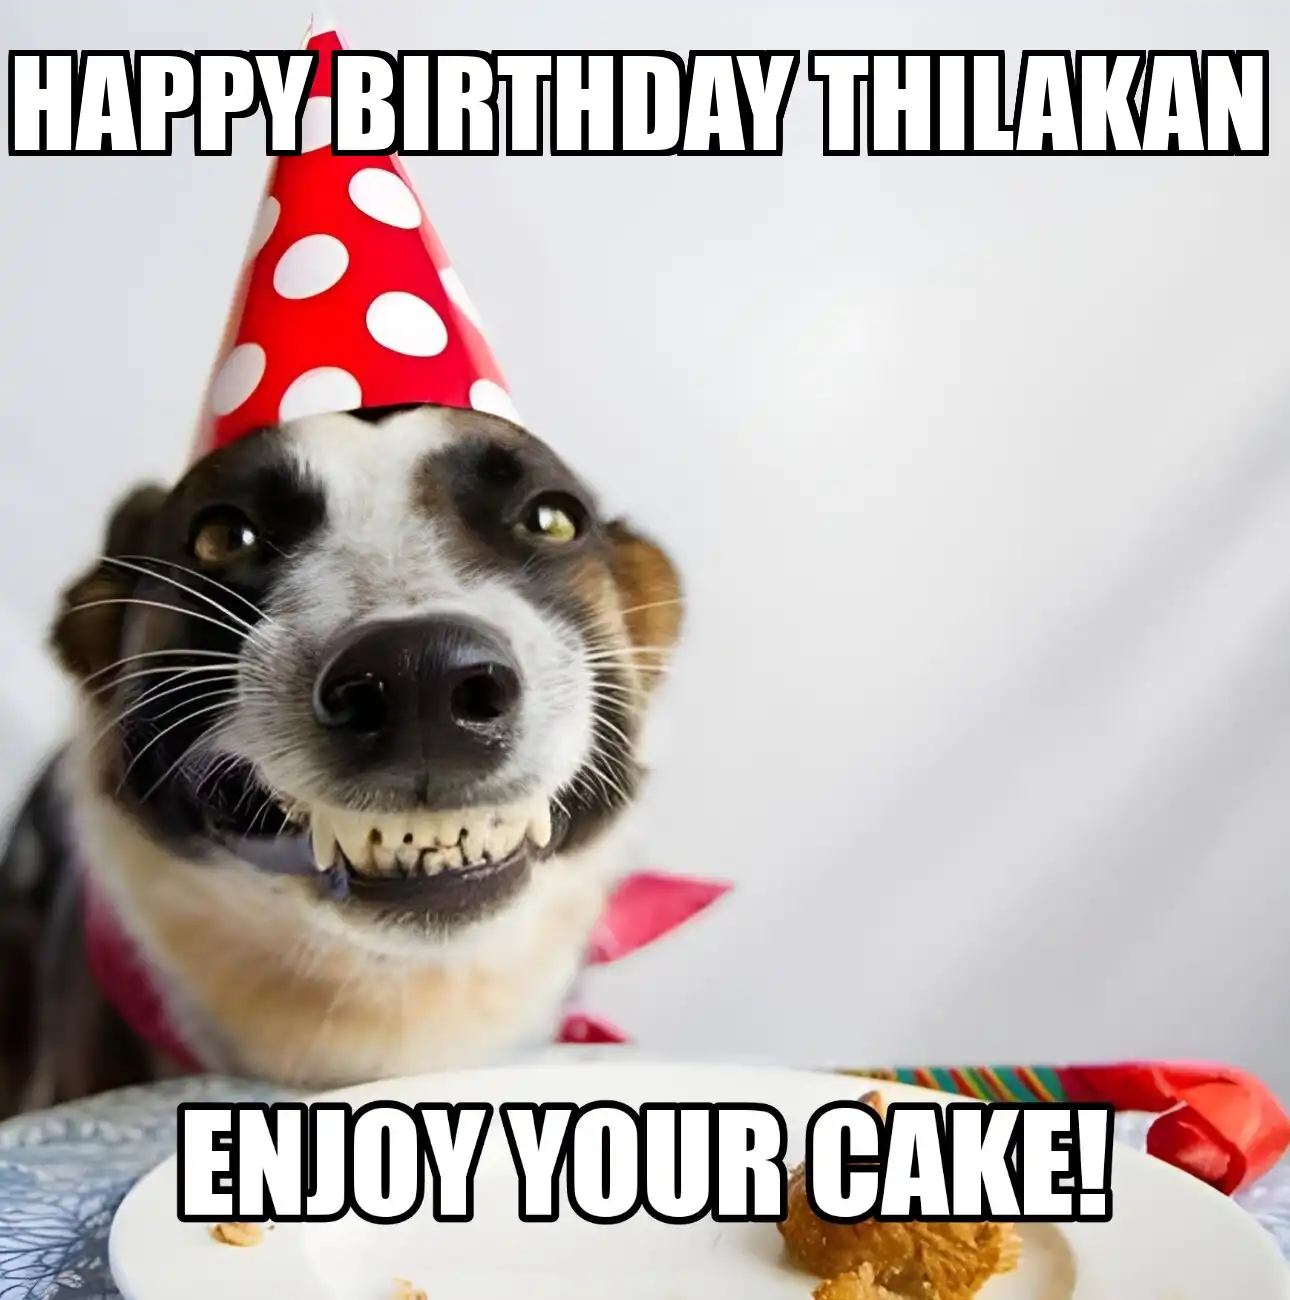 Happy Birthday Thilakan Enjoy Your Cake Dog Meme